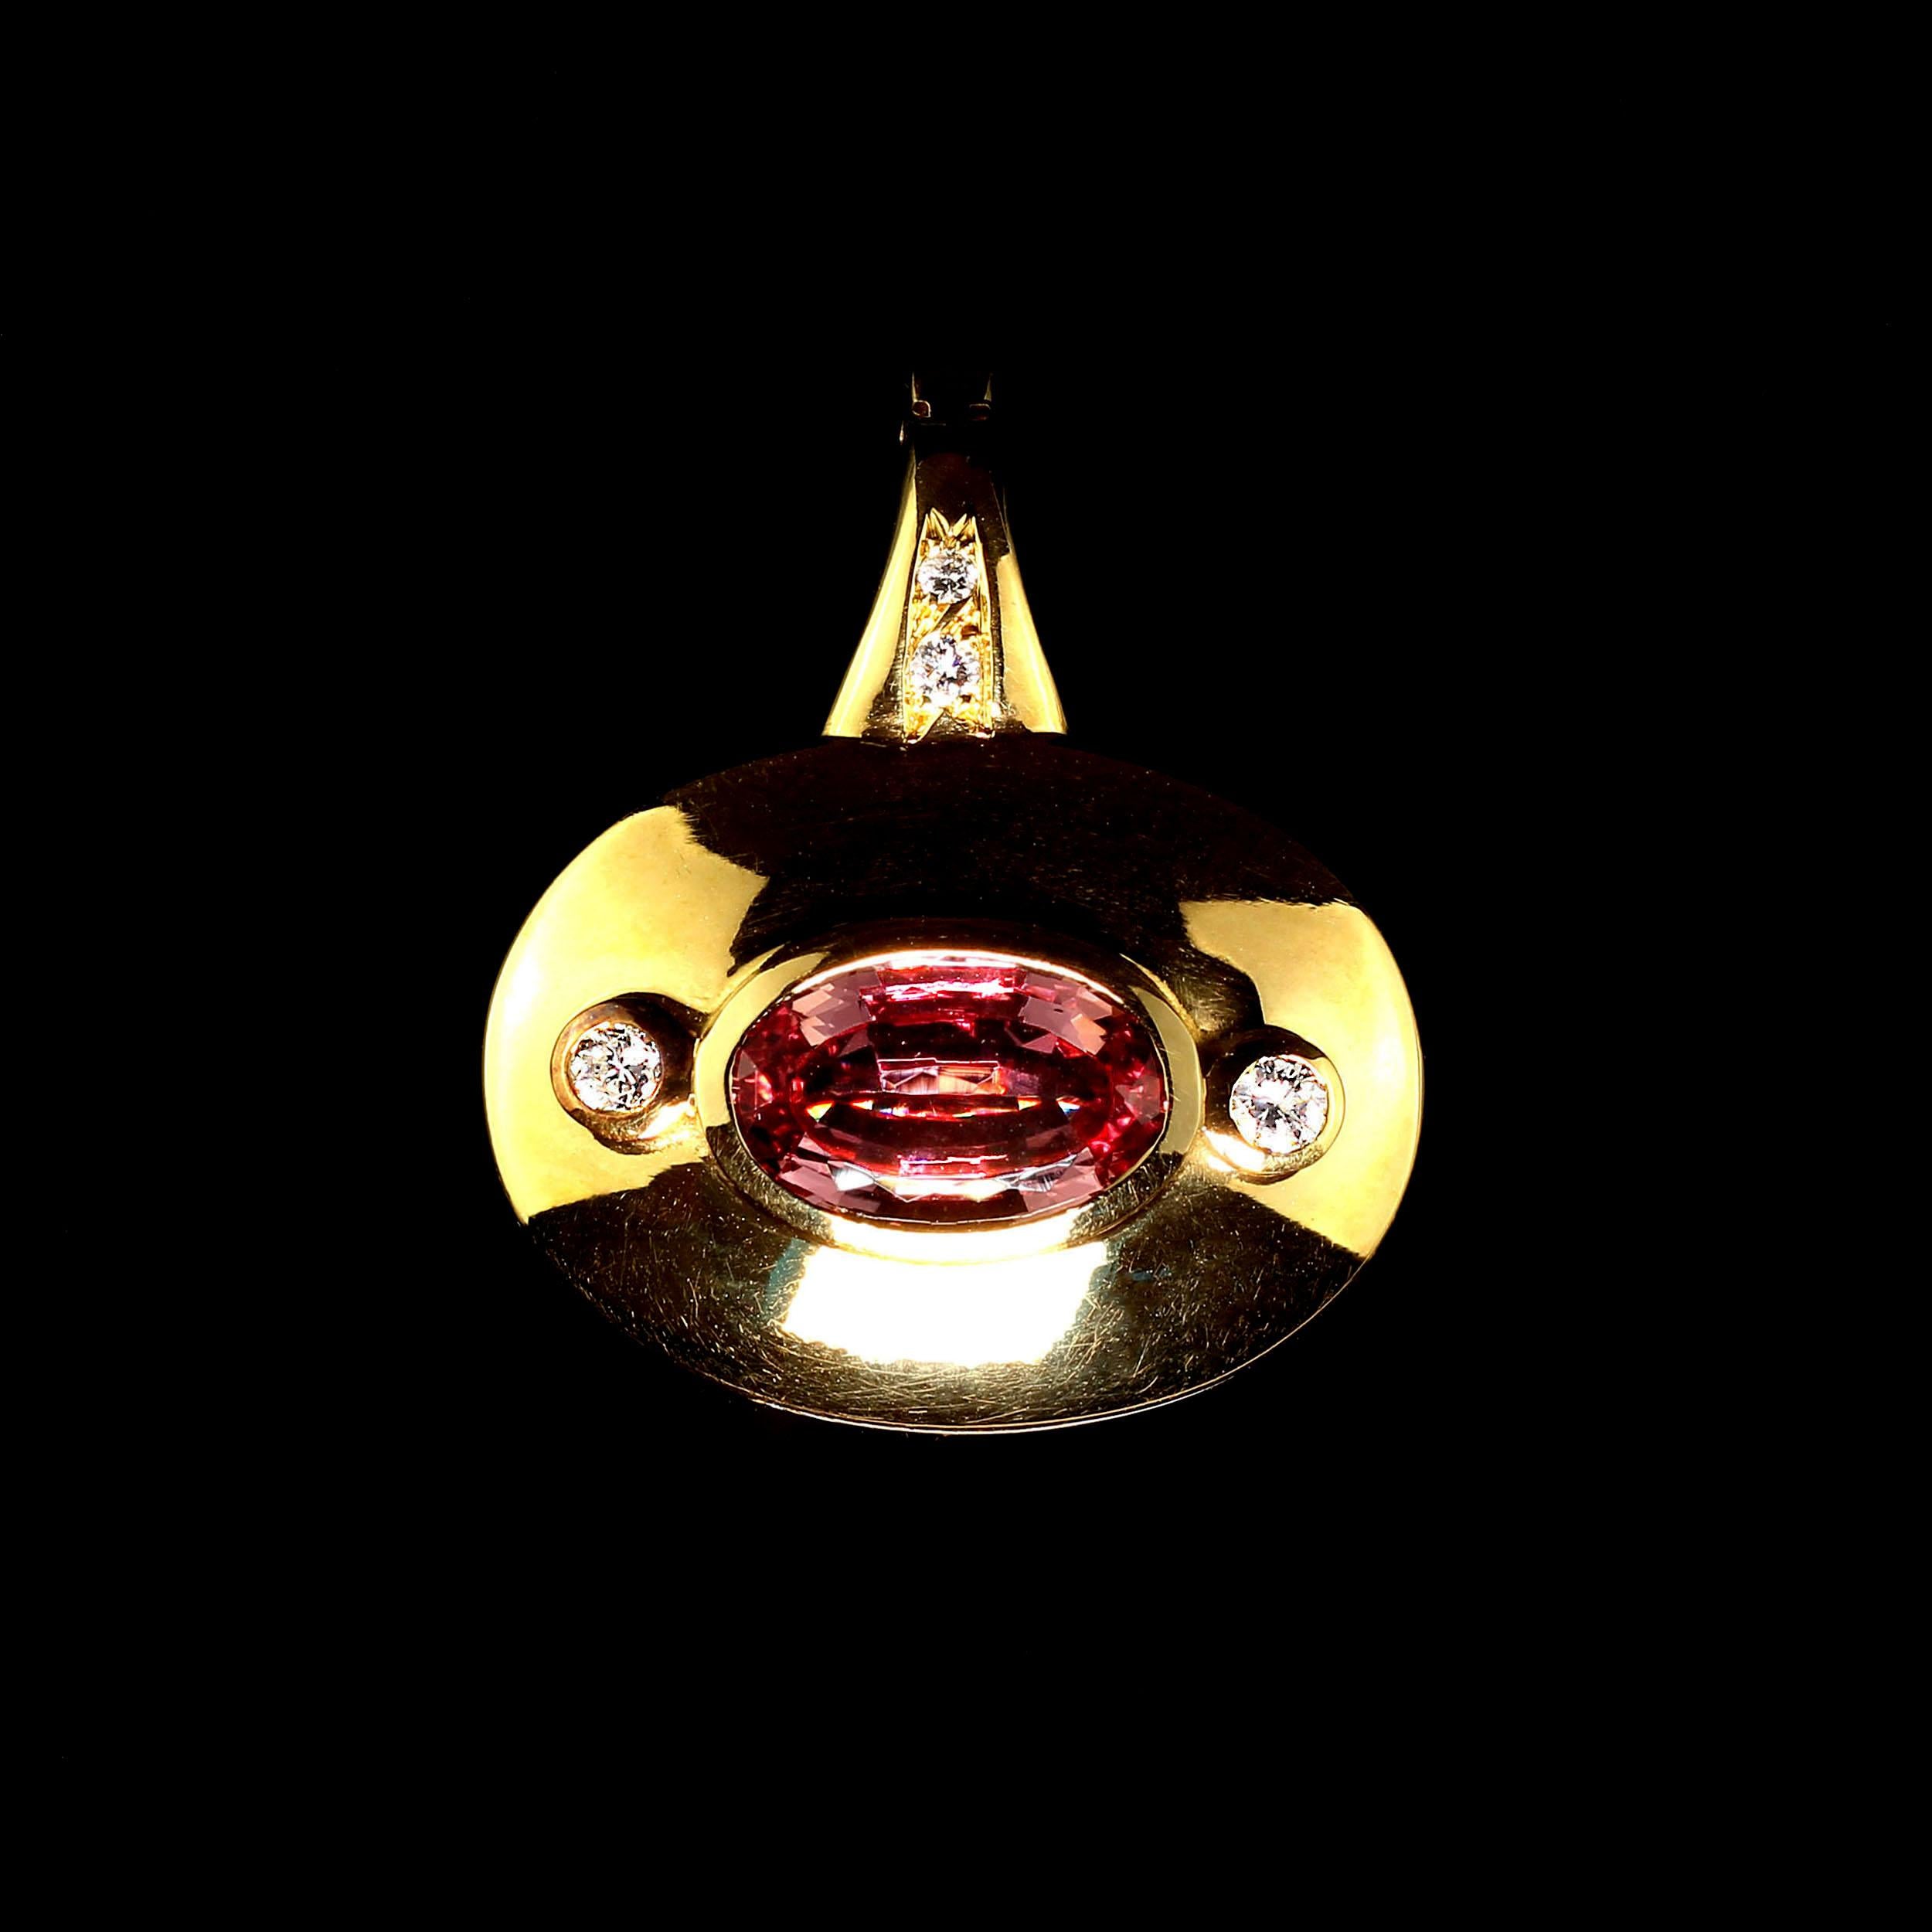 AJD 18K Gold Pendant with Pink Tourmaline and Diamonds 1